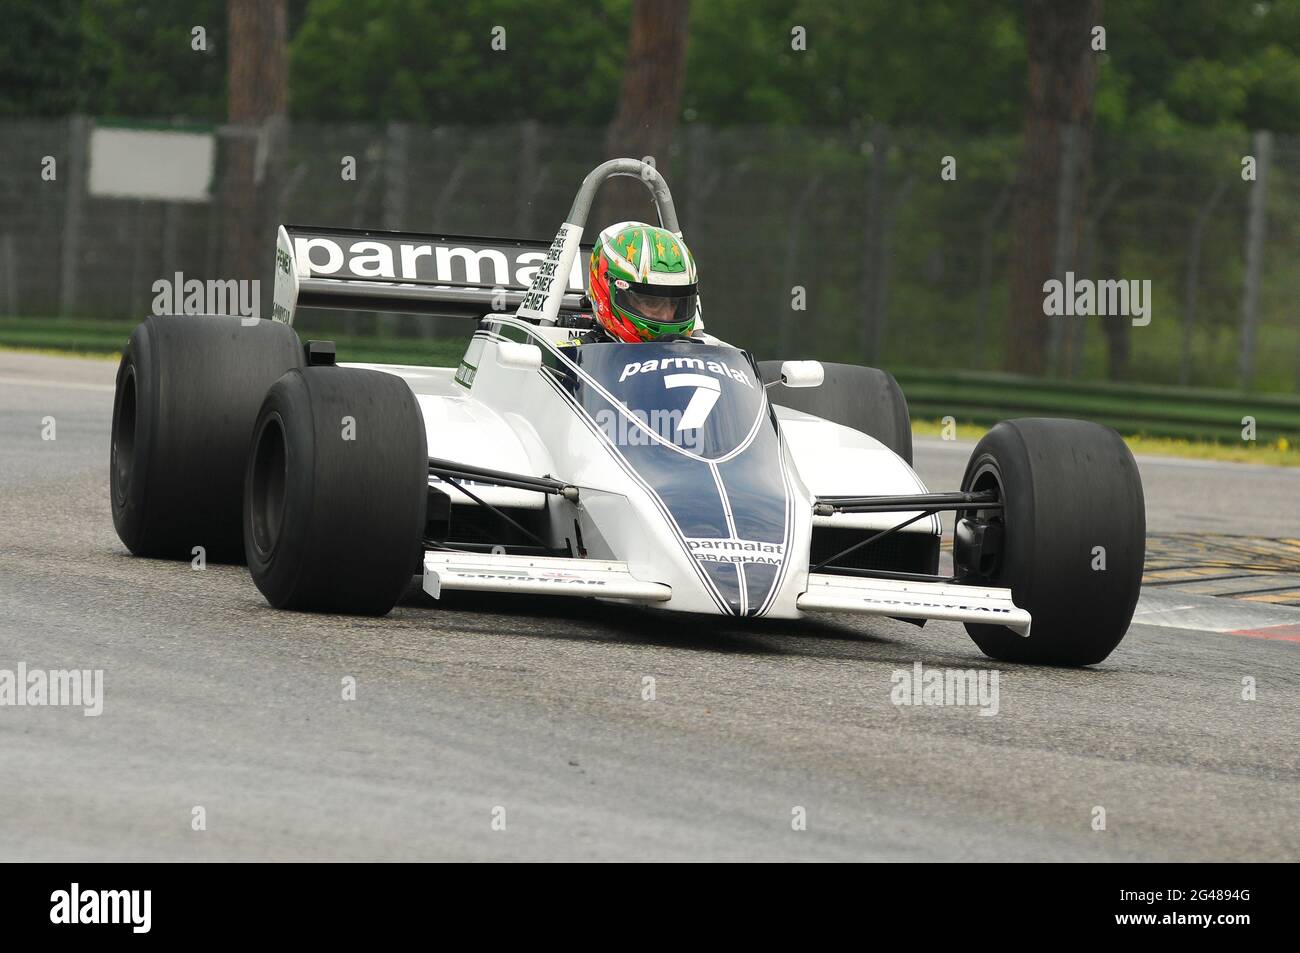 Imola, 6. Juni 2012: Unbekannter Lauf auf dem Classic F1 Car 1981 Brabham BT49c ex Nelson Piquet - Riccardo Patrese beim Training von Imola Classic 2012 auf Imol Stockfoto